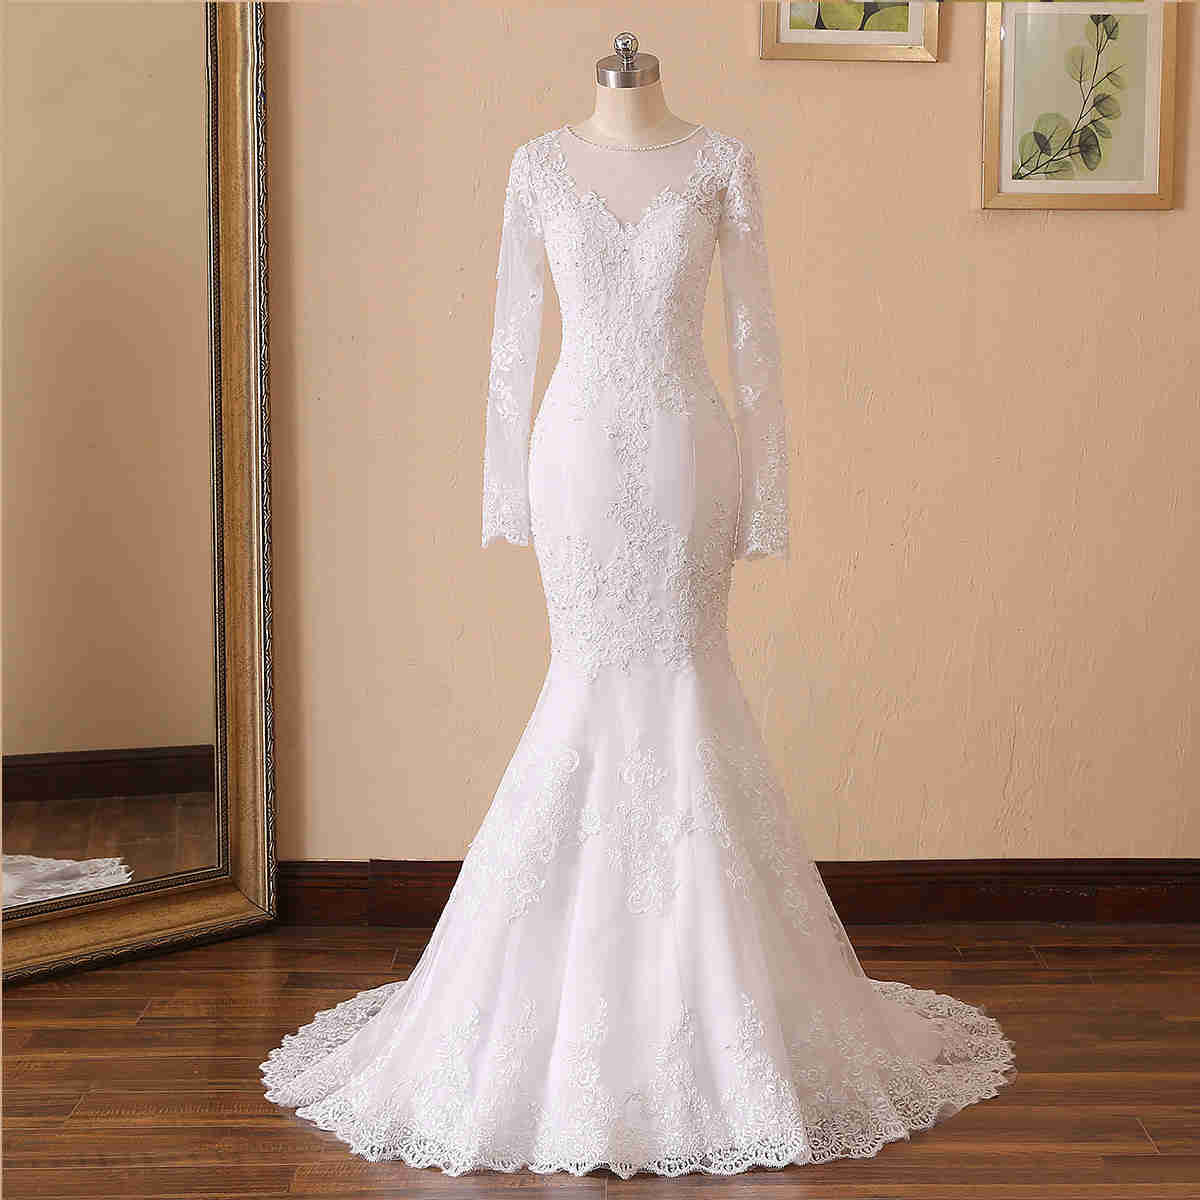 Elegant Long Sleeves Appliqued White Wedding Dresss?Elegant Long Sleeves Appliqued White Wedding Dresss?long dress,cheap dress,evening dress,bridal dress,prom dress 2021